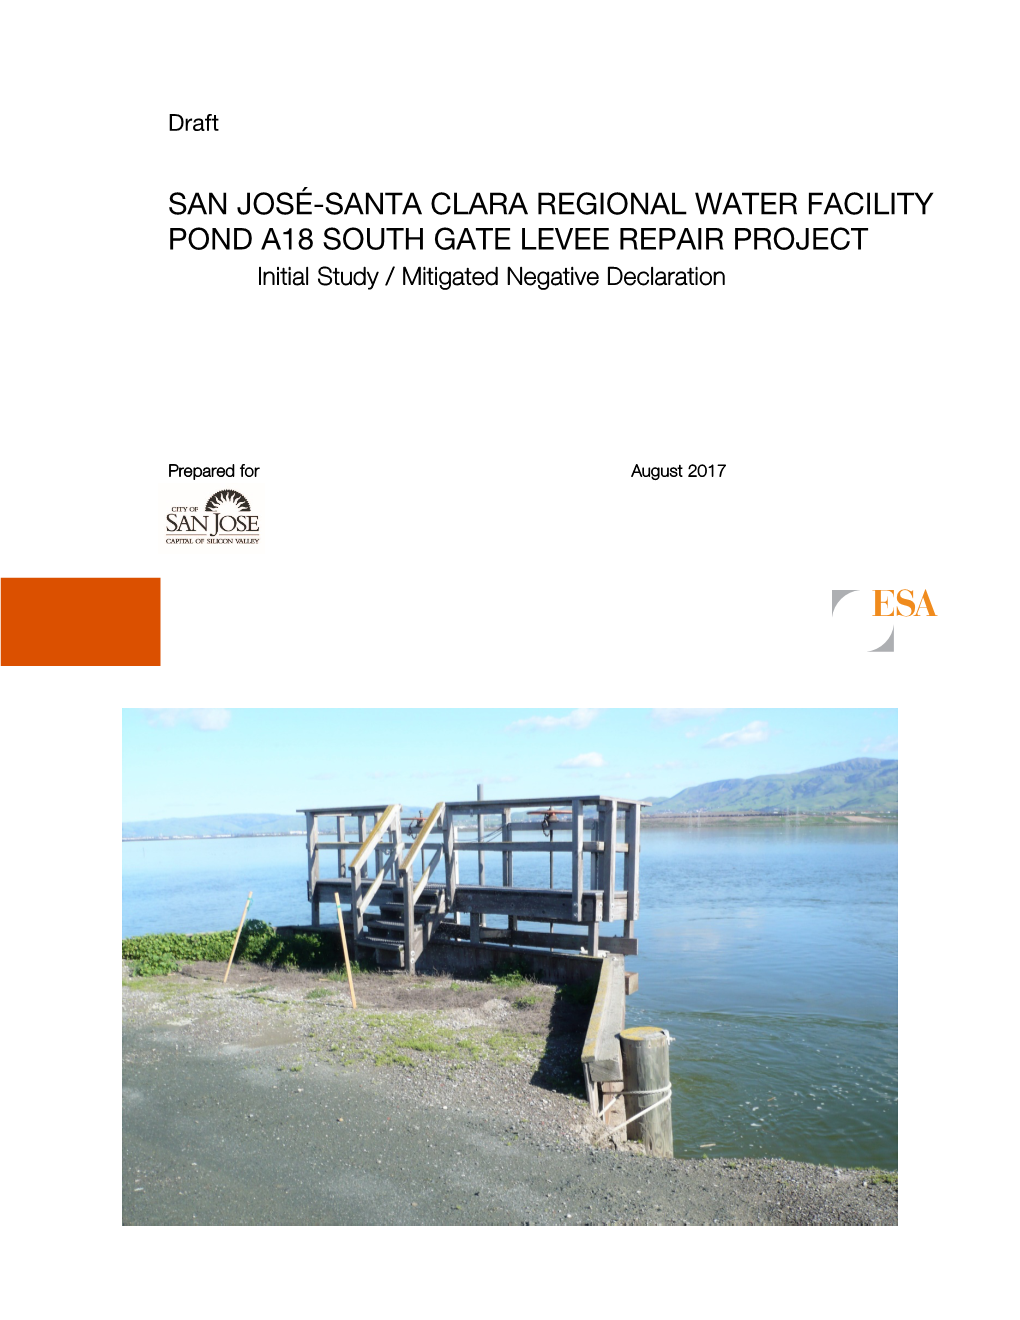 SAN JOSÉ-SANTA CLARA REGIONAL WATER FACILITY POND A18 SOUTH GATE LEVEE REPAIR PROJECT Initial Study / Mitigated Negative Declaration